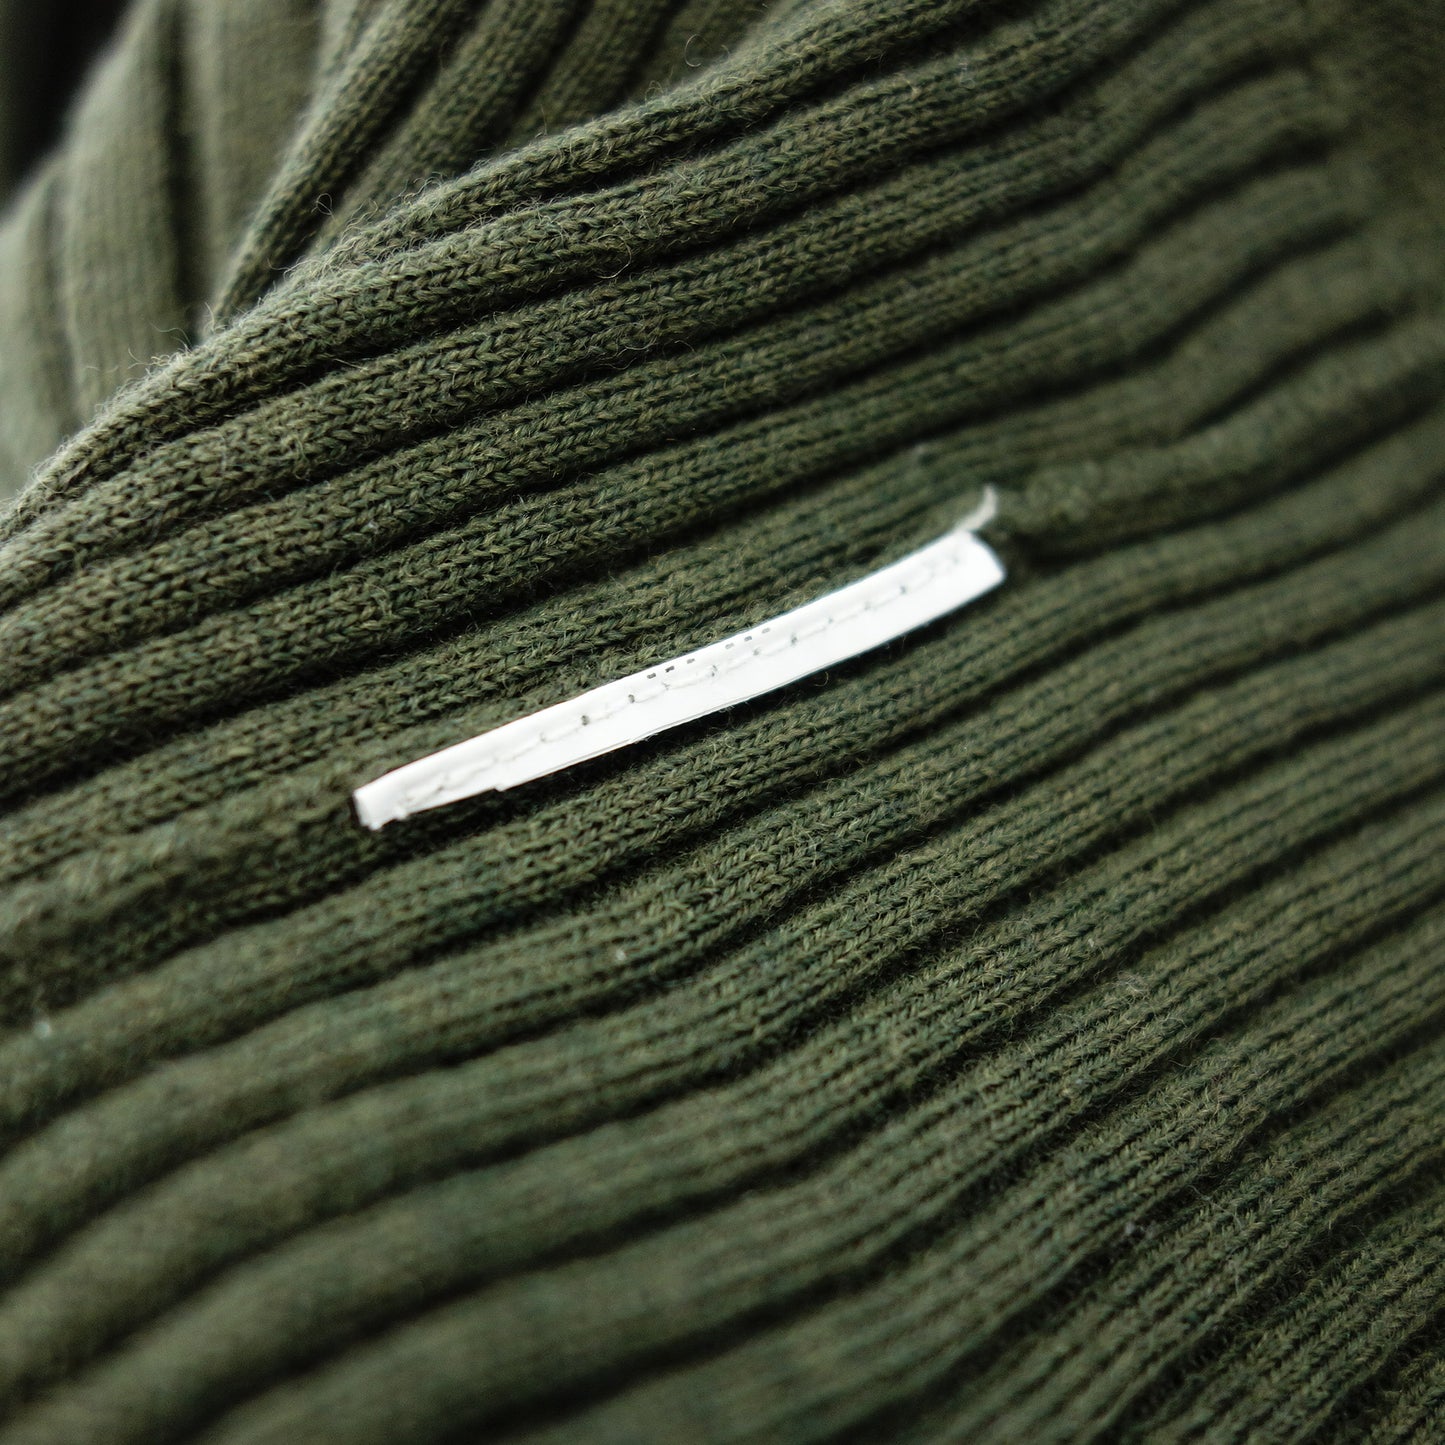 Maison Margiela 针织毛衣高领罗纹针织女式绿色 XS Maison Margiela [AFB29] [二手] 